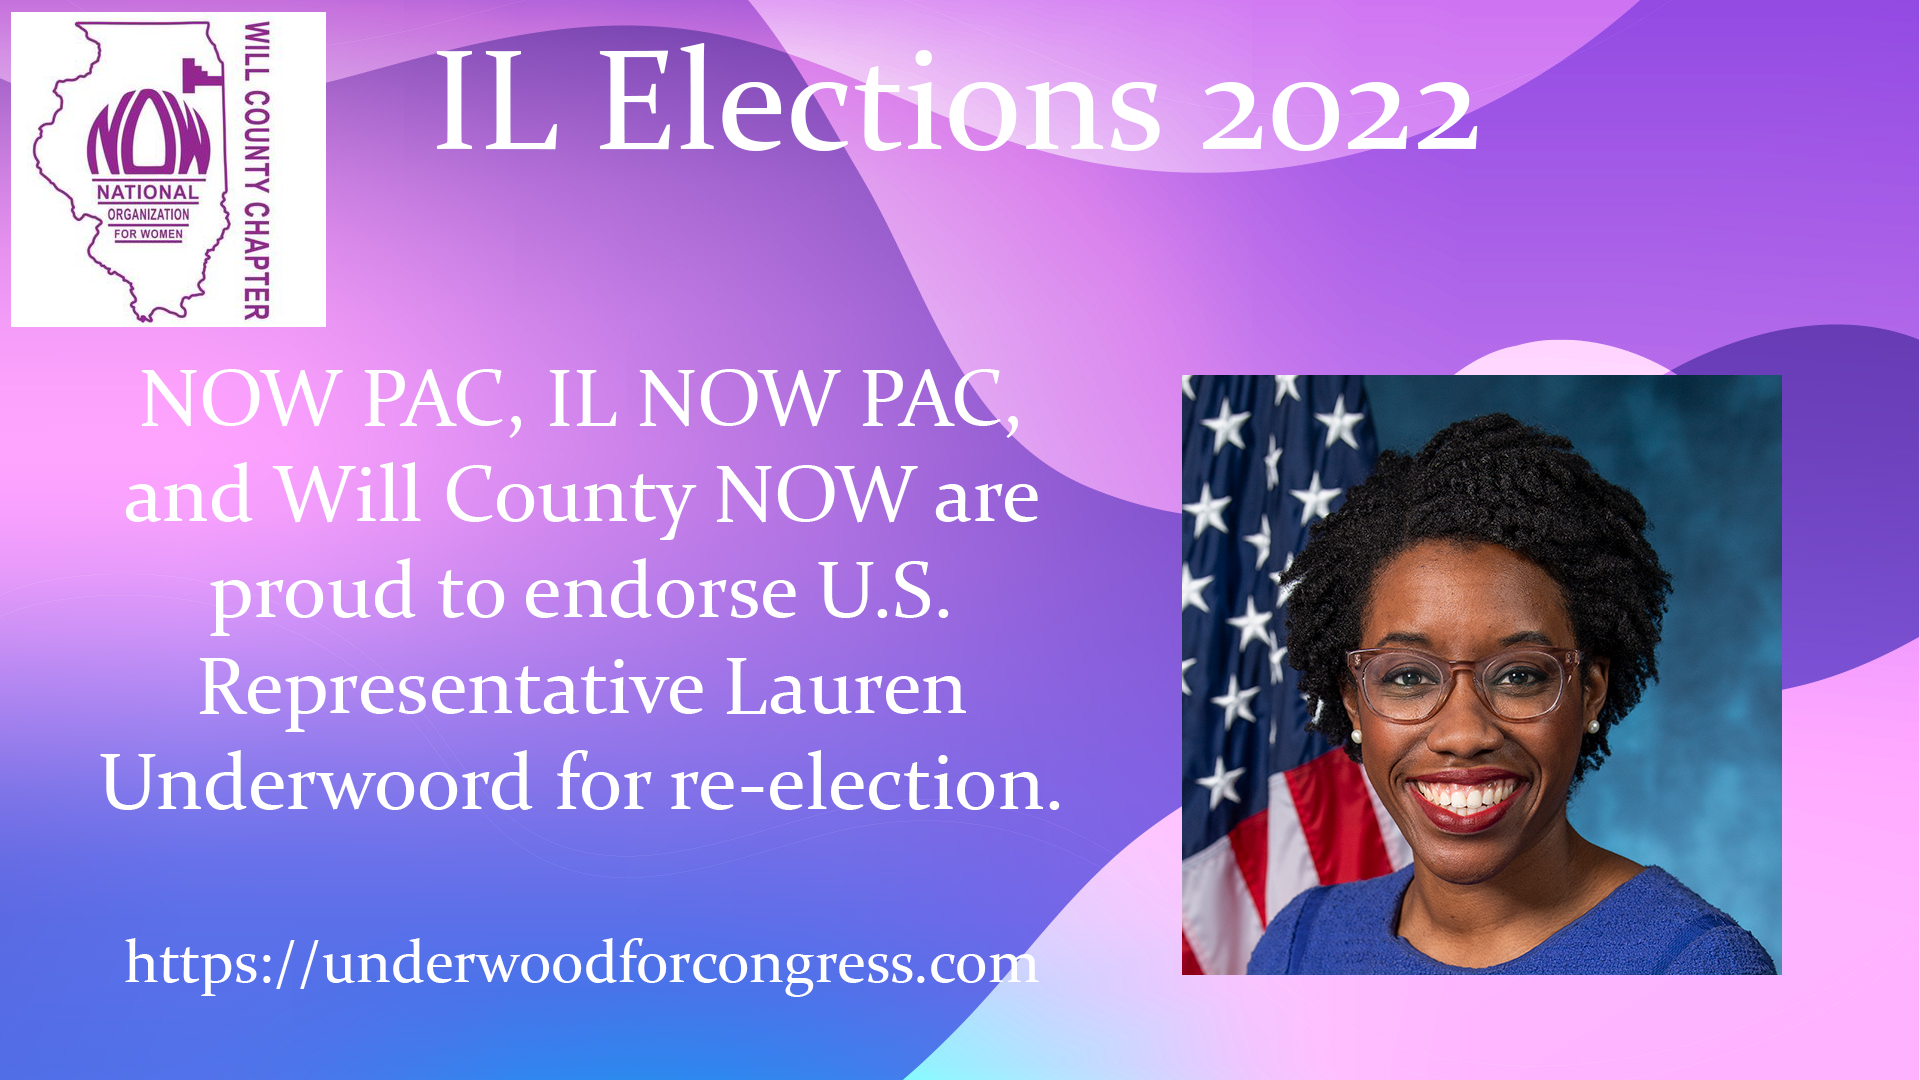 Will County NOW Endorses U.S. Representative Lauren Underwood for Re-Election